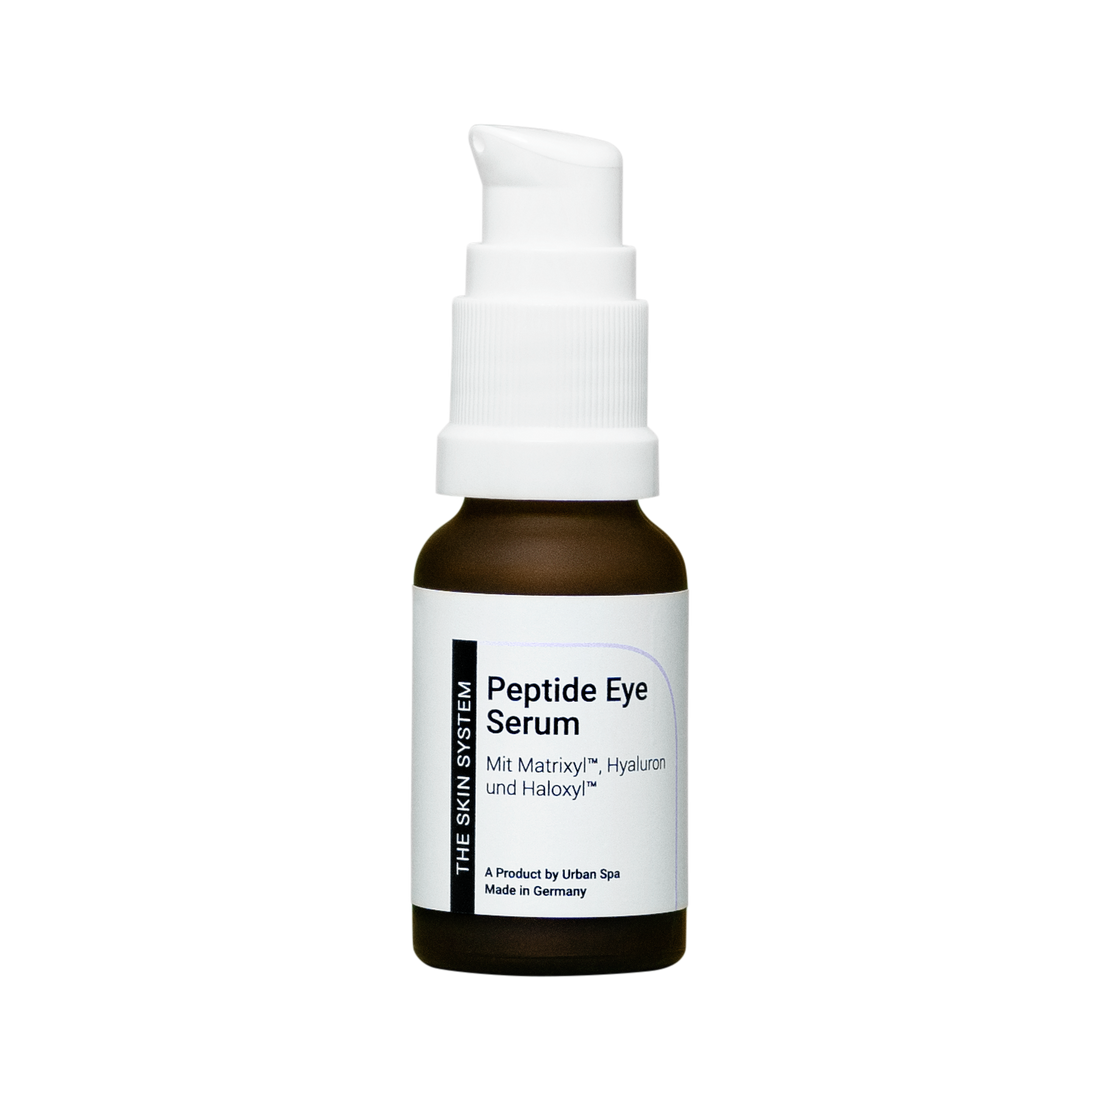 Peptide Eye Serum